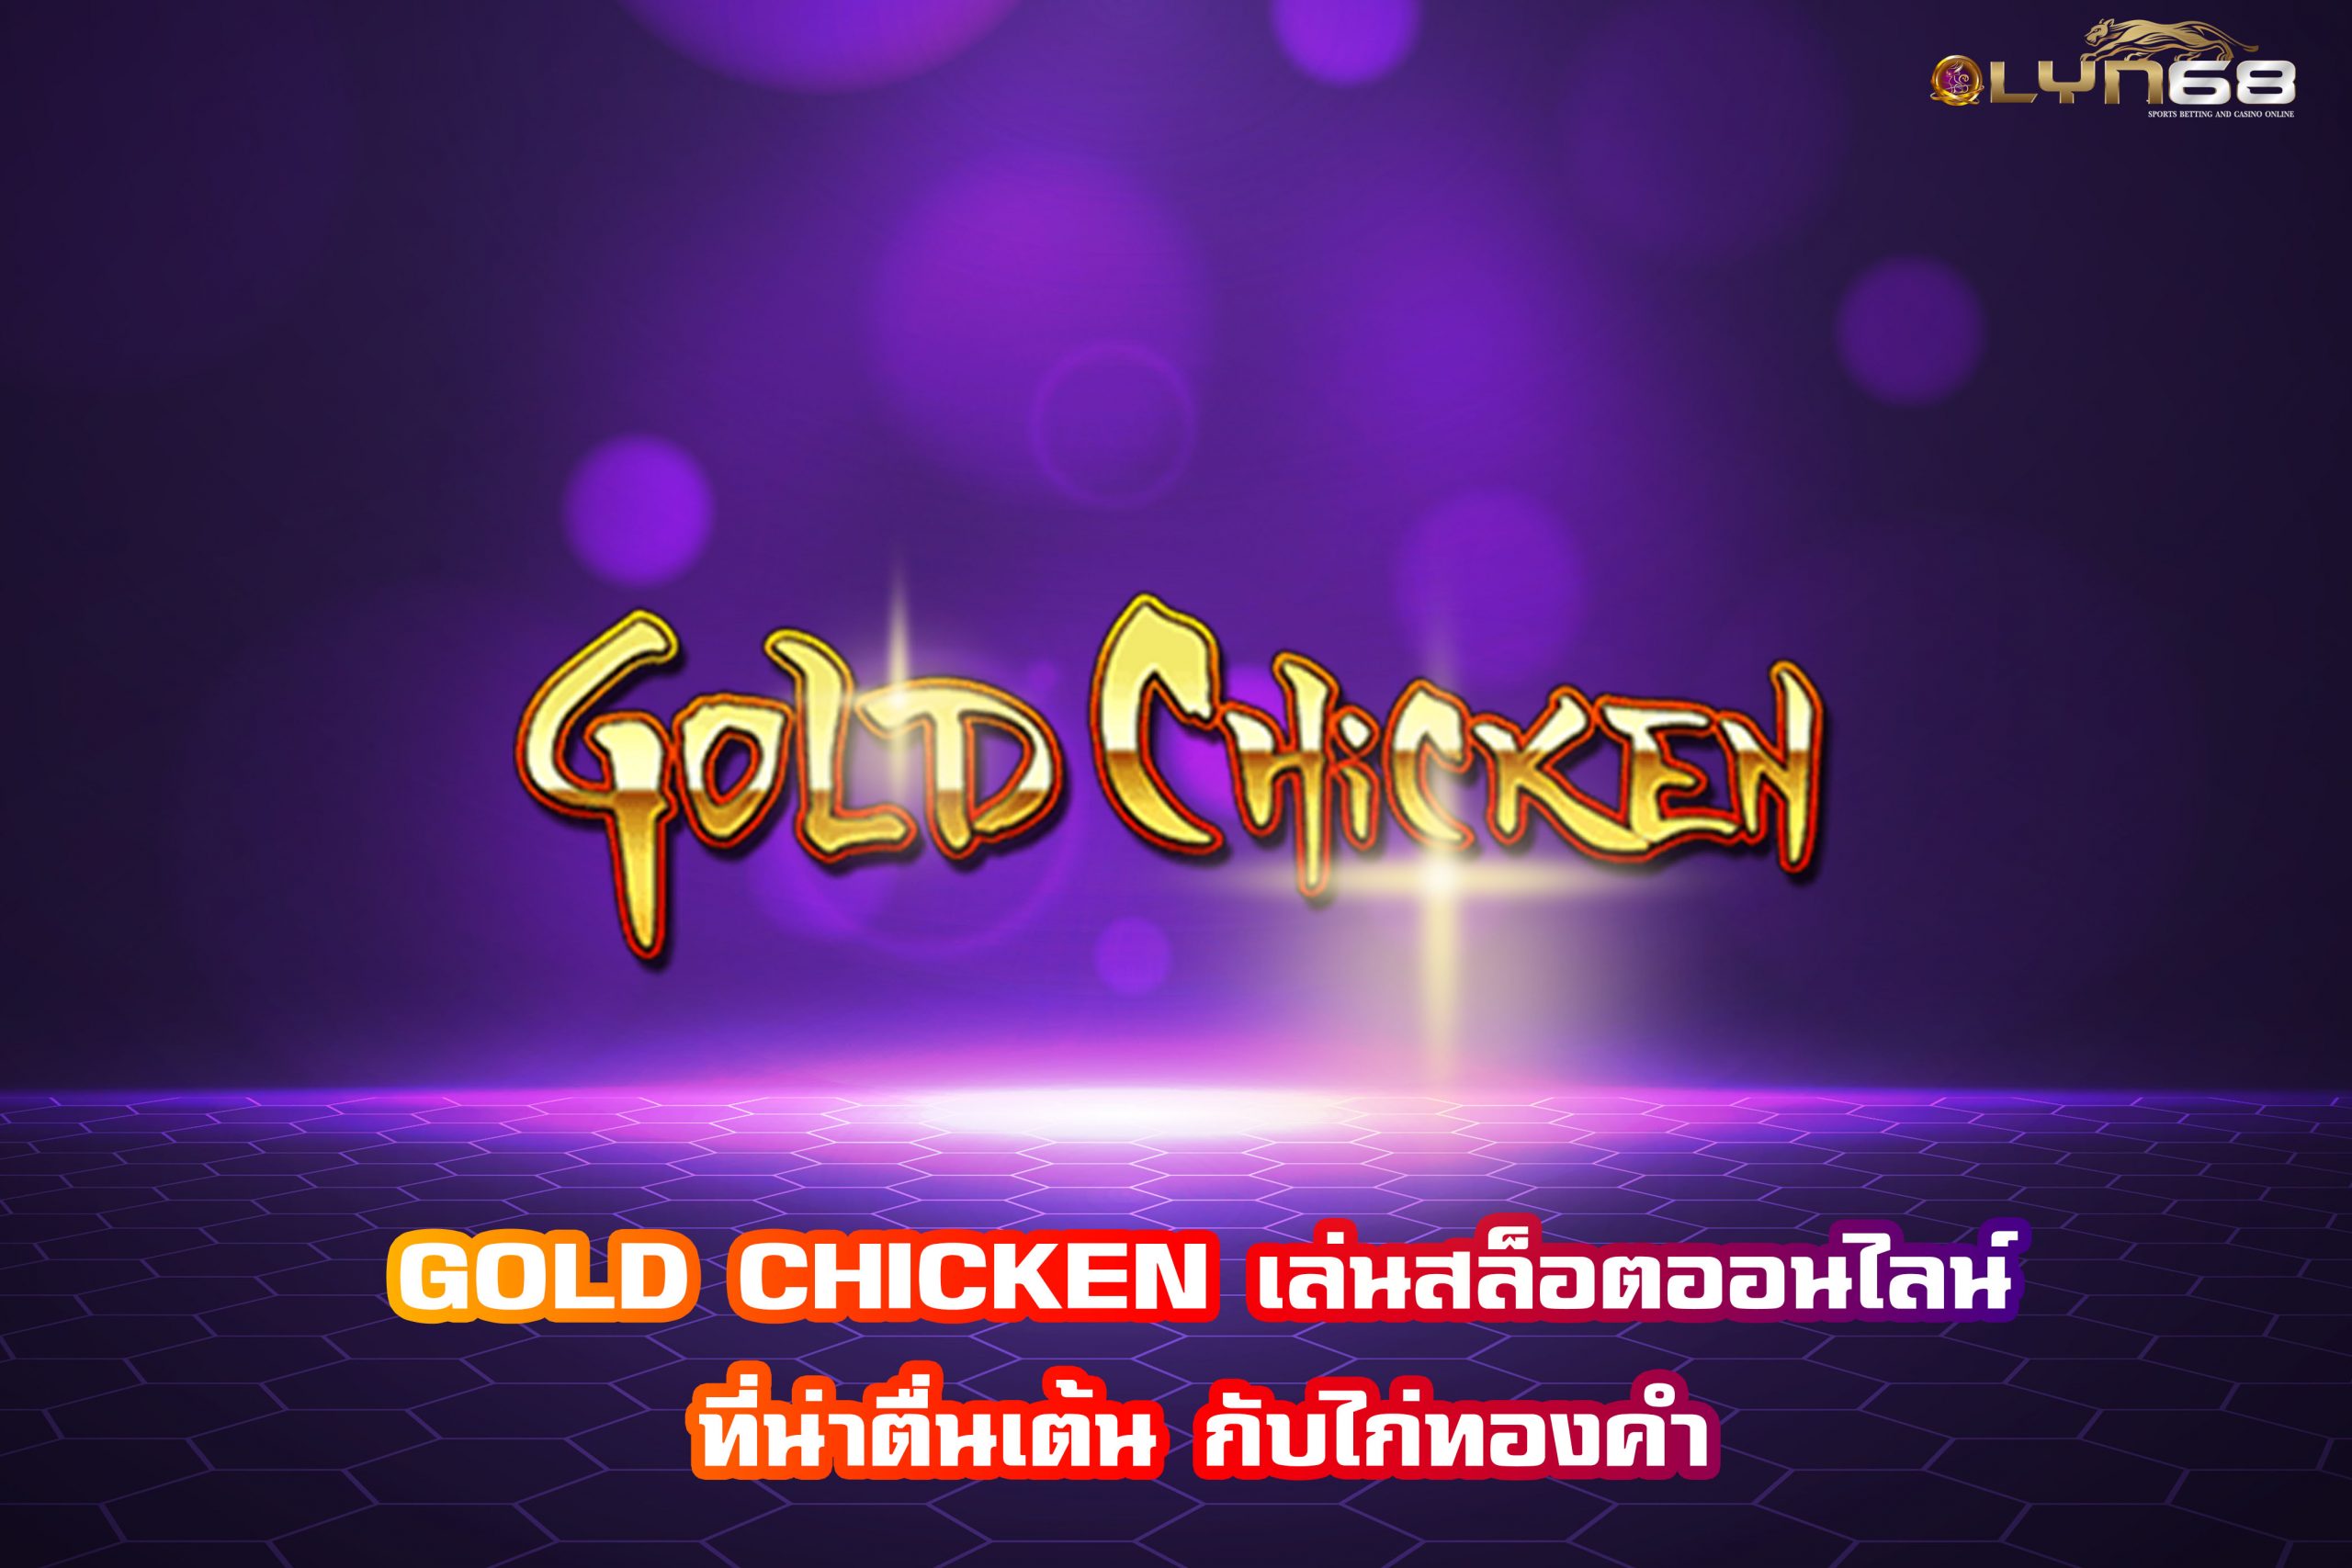 GOLD CHICKEN เล่นสล็อตออนไลน์ที่น่าตื่นเต้น กับไก่ทองคำ